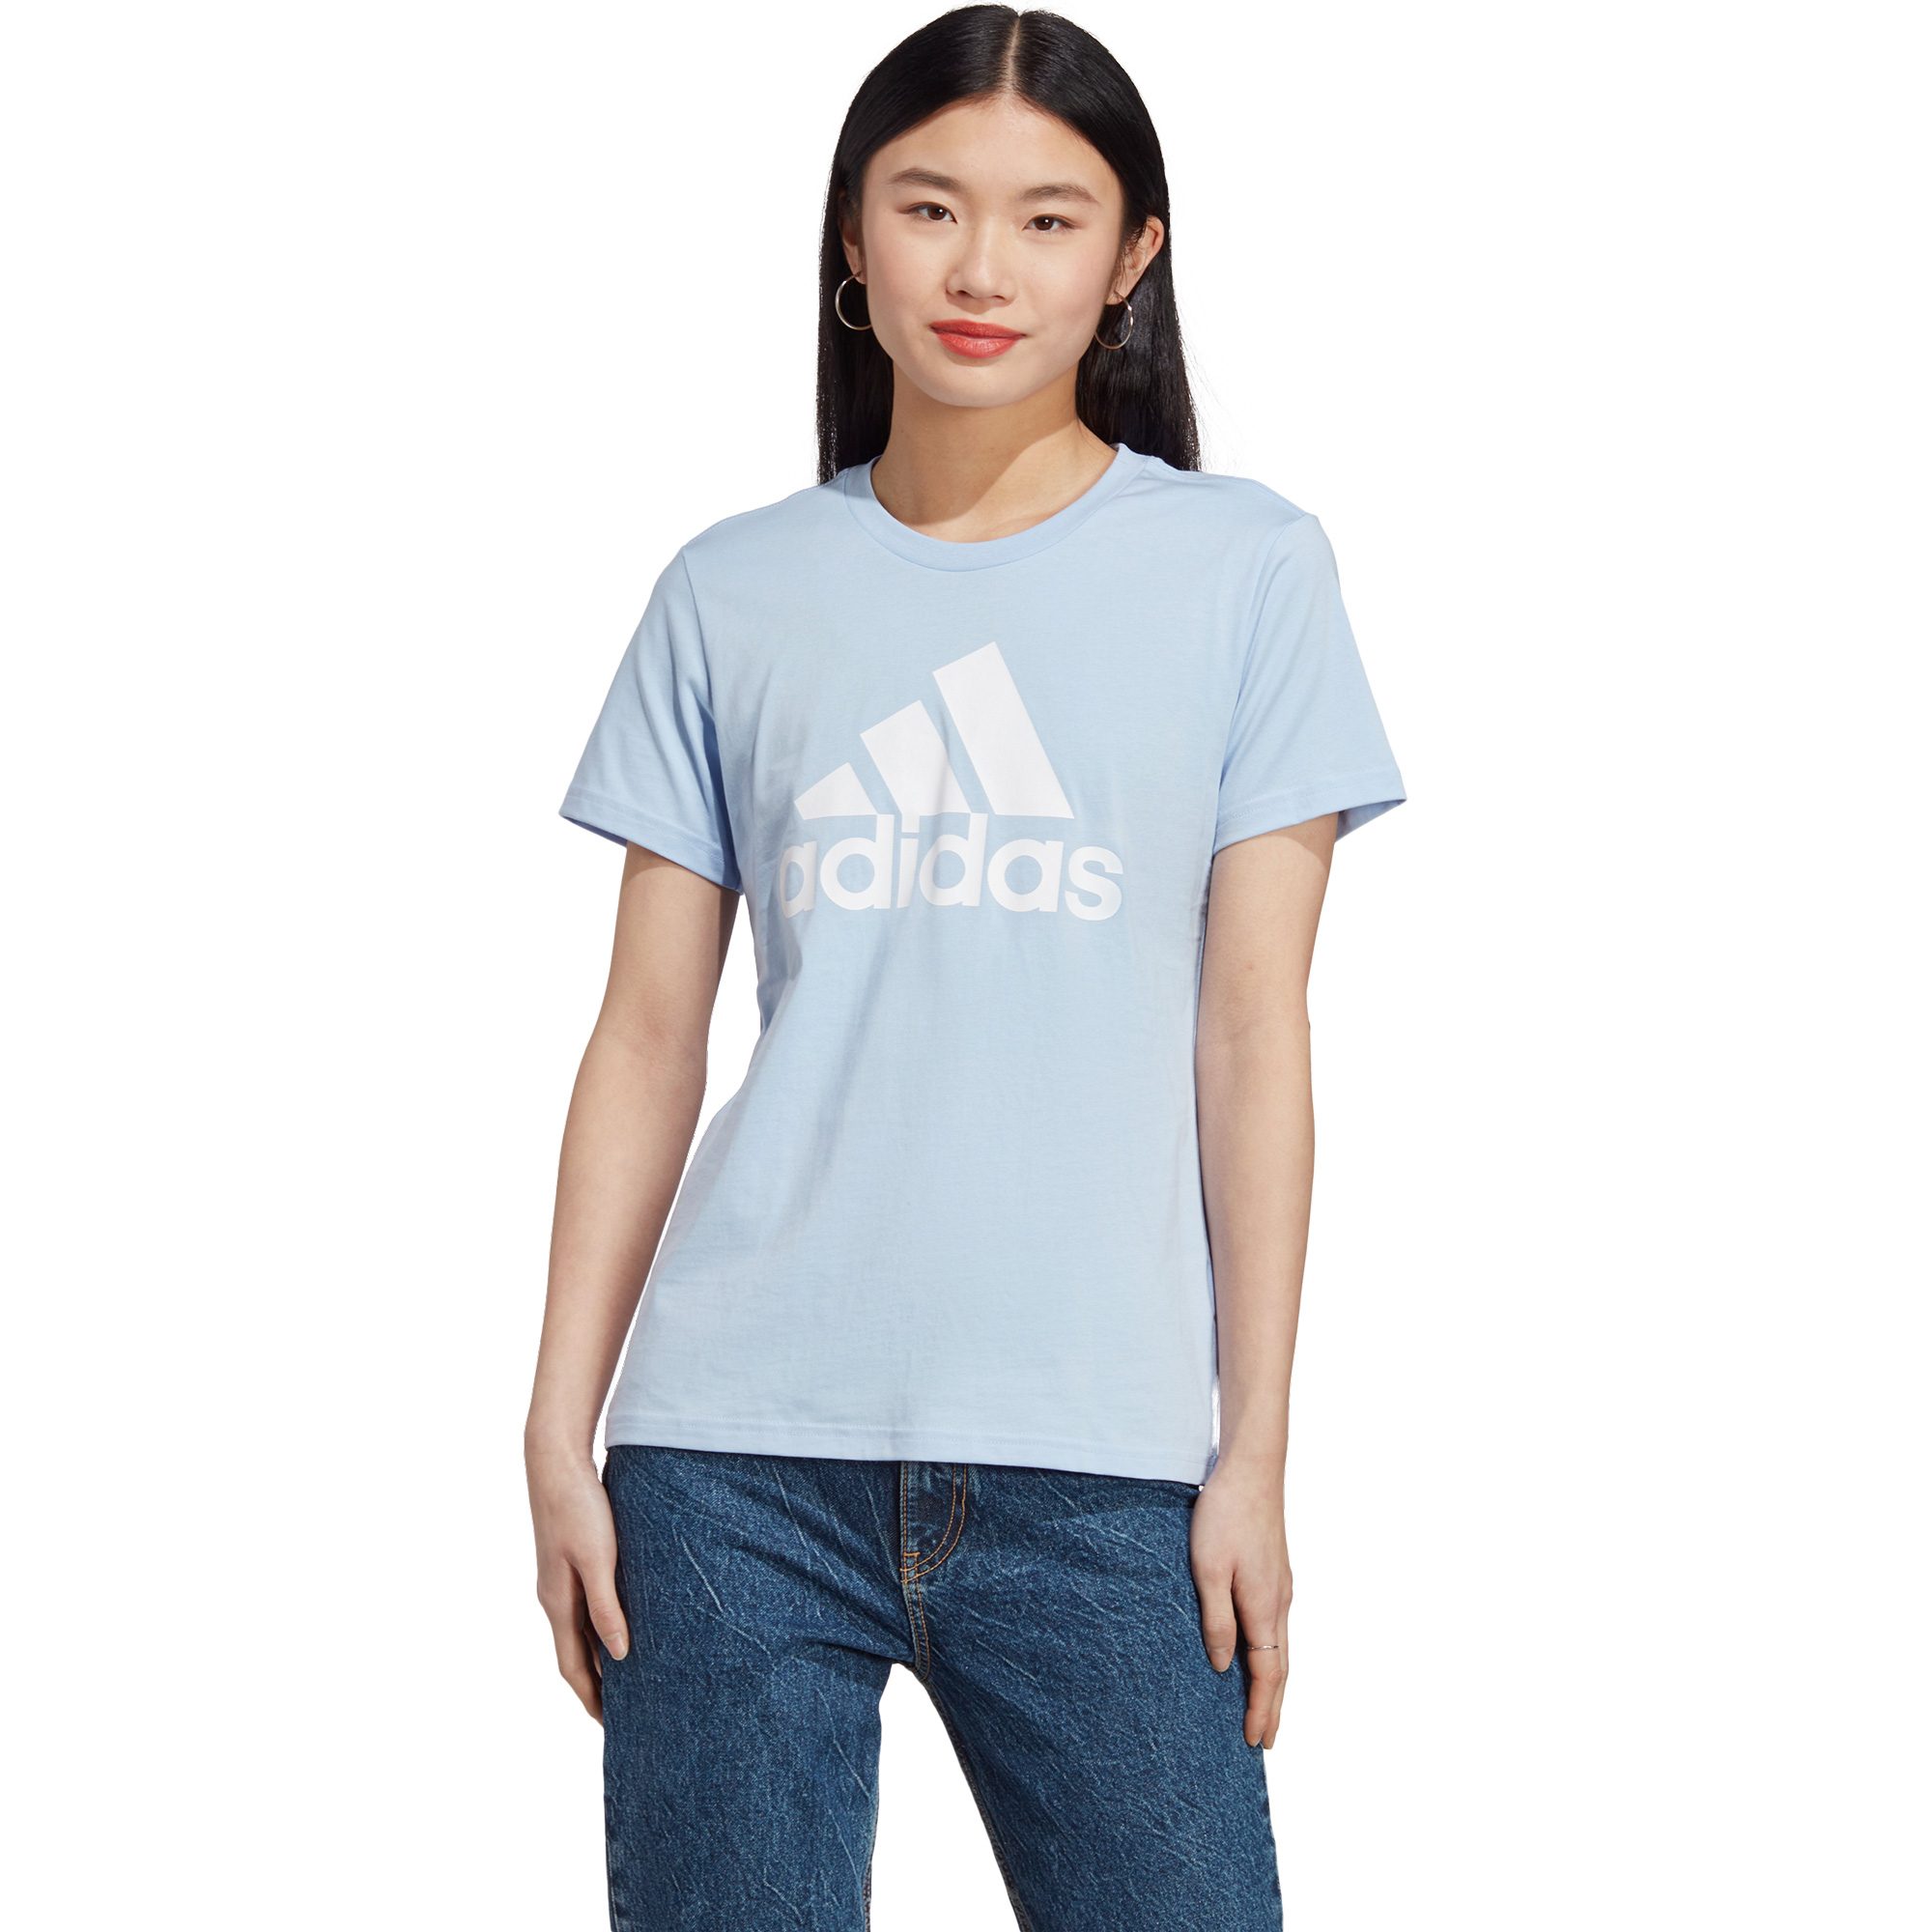 adidas Loungewear Essentials Logo T-Shirt Damen blue dawn kaufen im Sport Bittl Shop